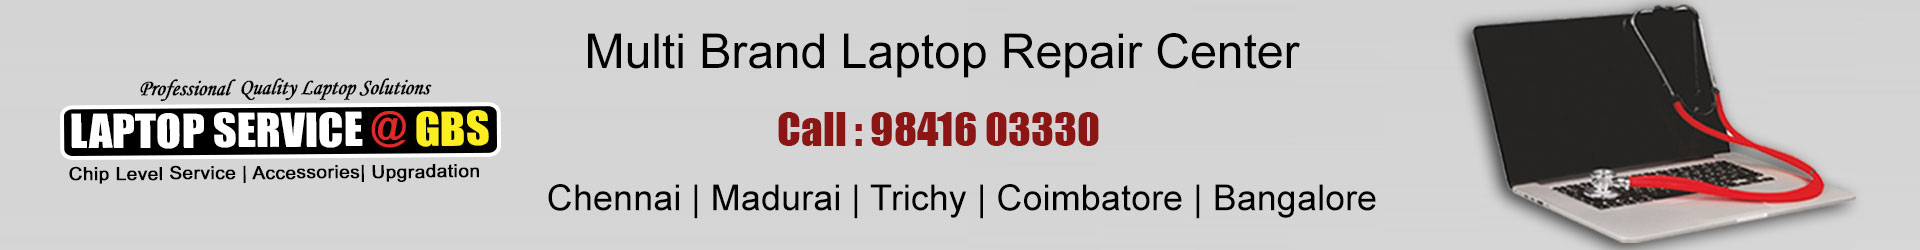 laptop service center in katpadi vellore